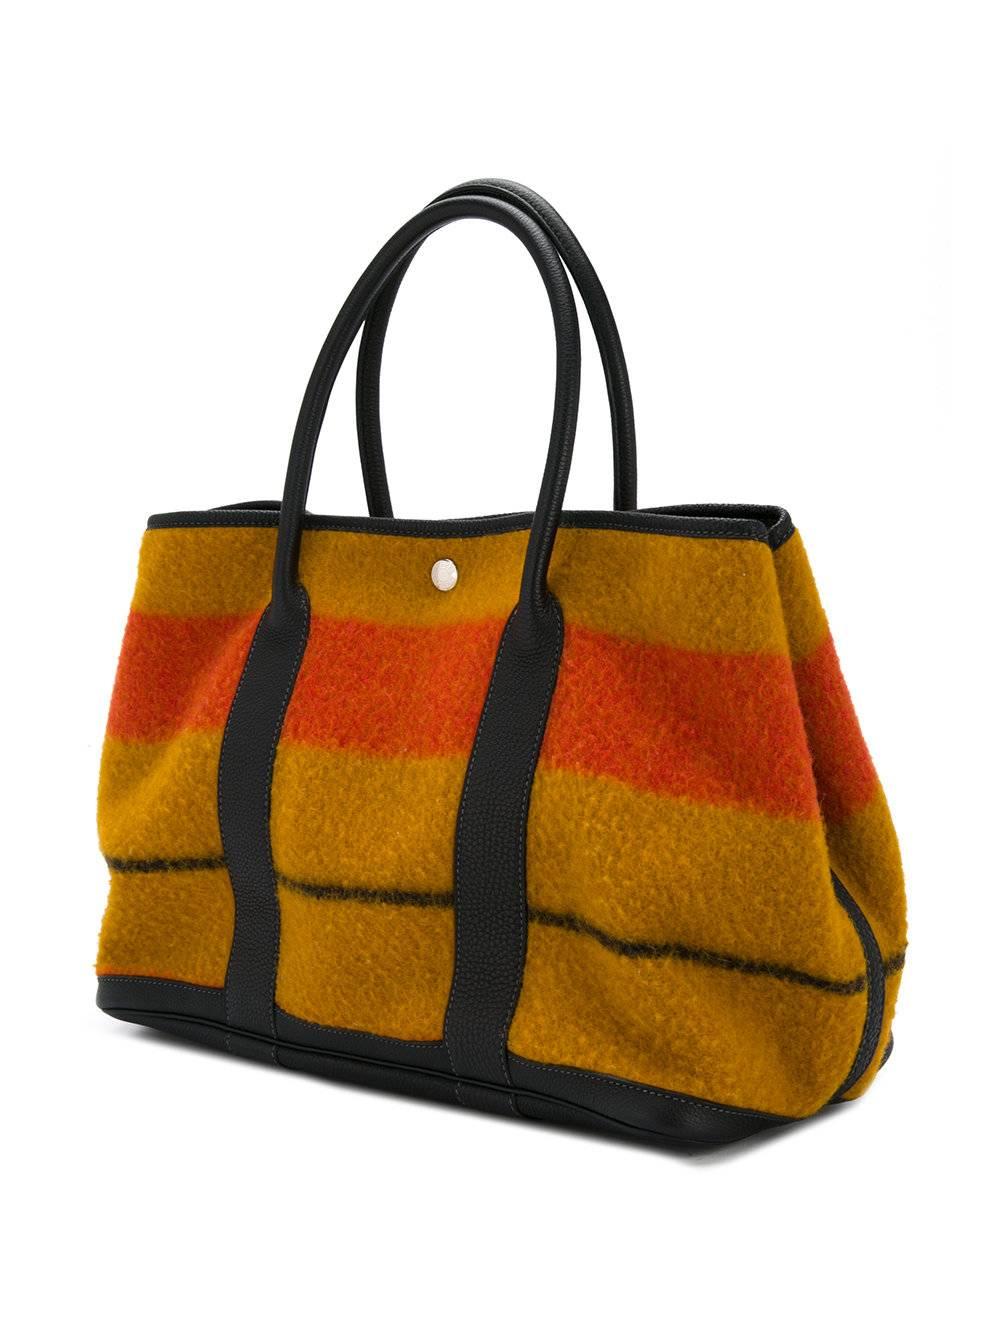 Hermes Multi Color Stripe Wool Leather Men's Carryall Travel Top Handle Tote Bag 1